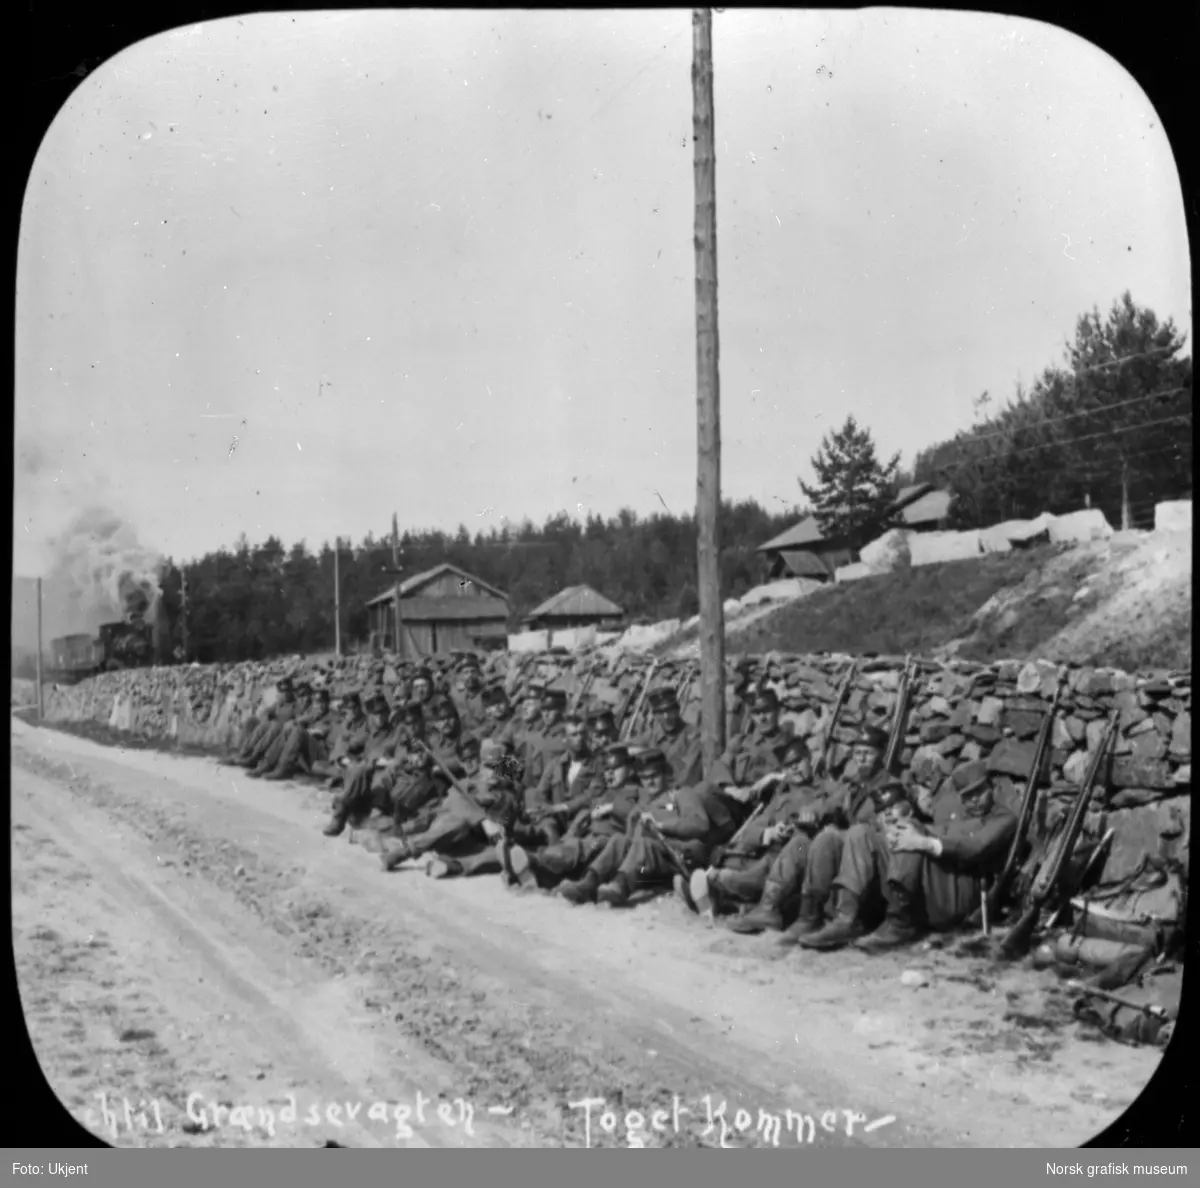 Soldater fra Norske jegerkorps eller grensevakten sitter i en veikant og venter på toget . Et damplokomotiv kommer i bakgrunnen.